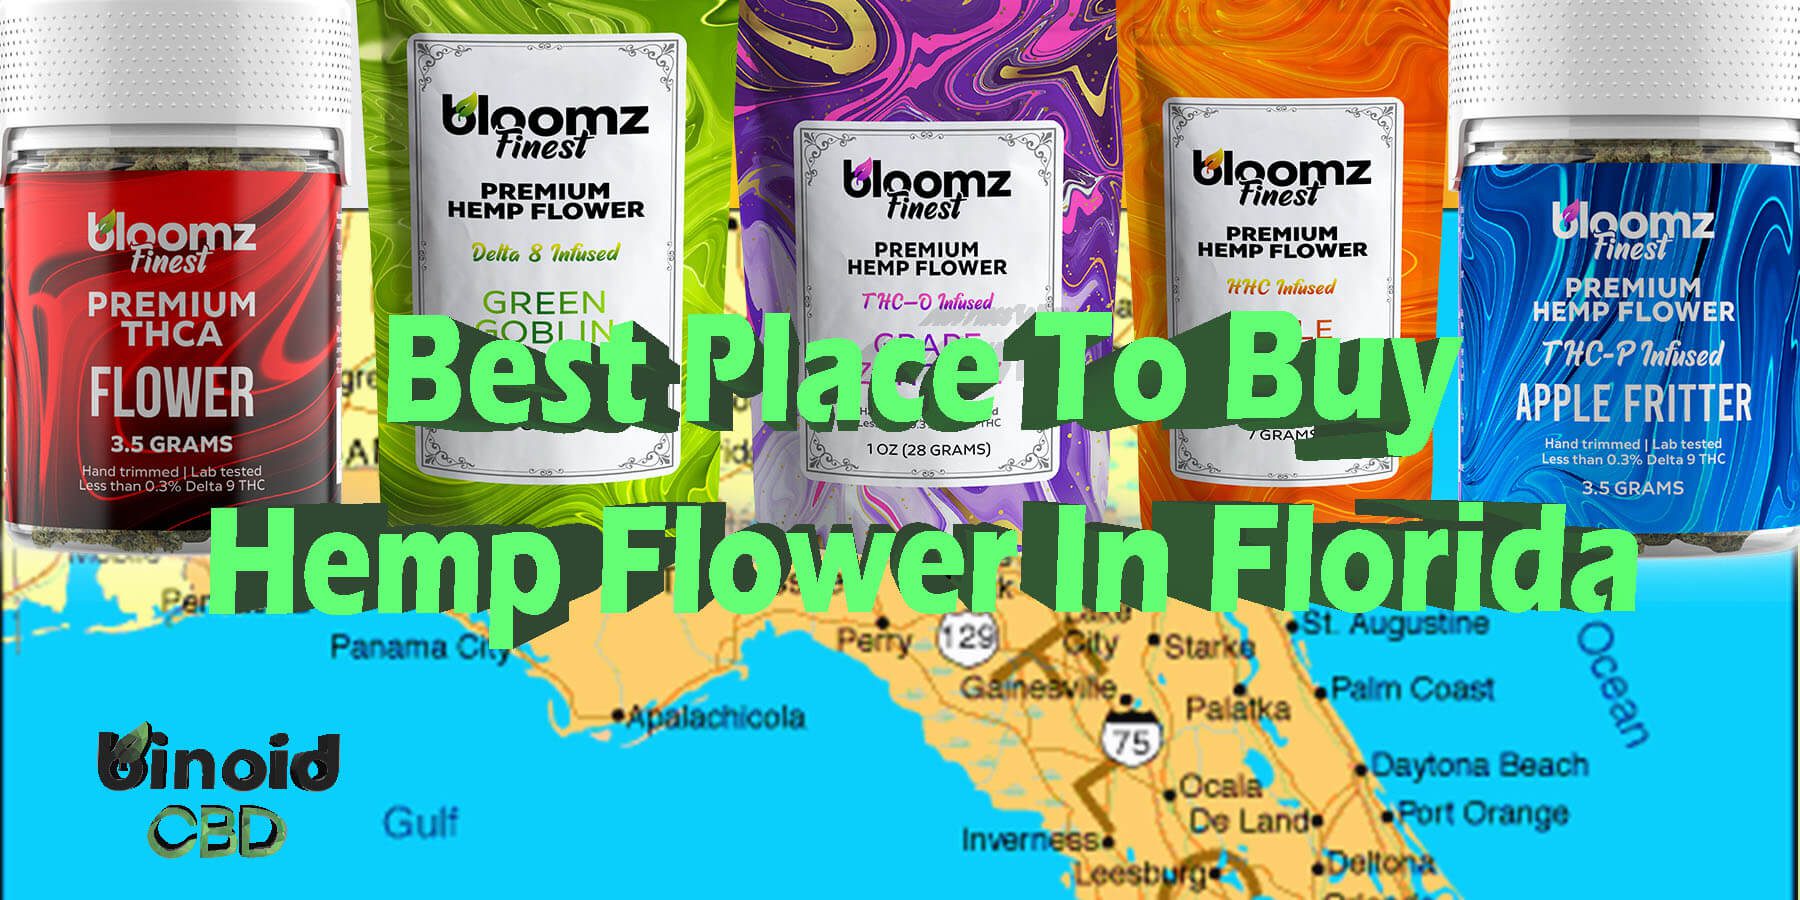 Buy Hemp Flower Florida Rolls Get Online Near Me For Sale Best Brand Strongest Real Legal Store Shop Reddit